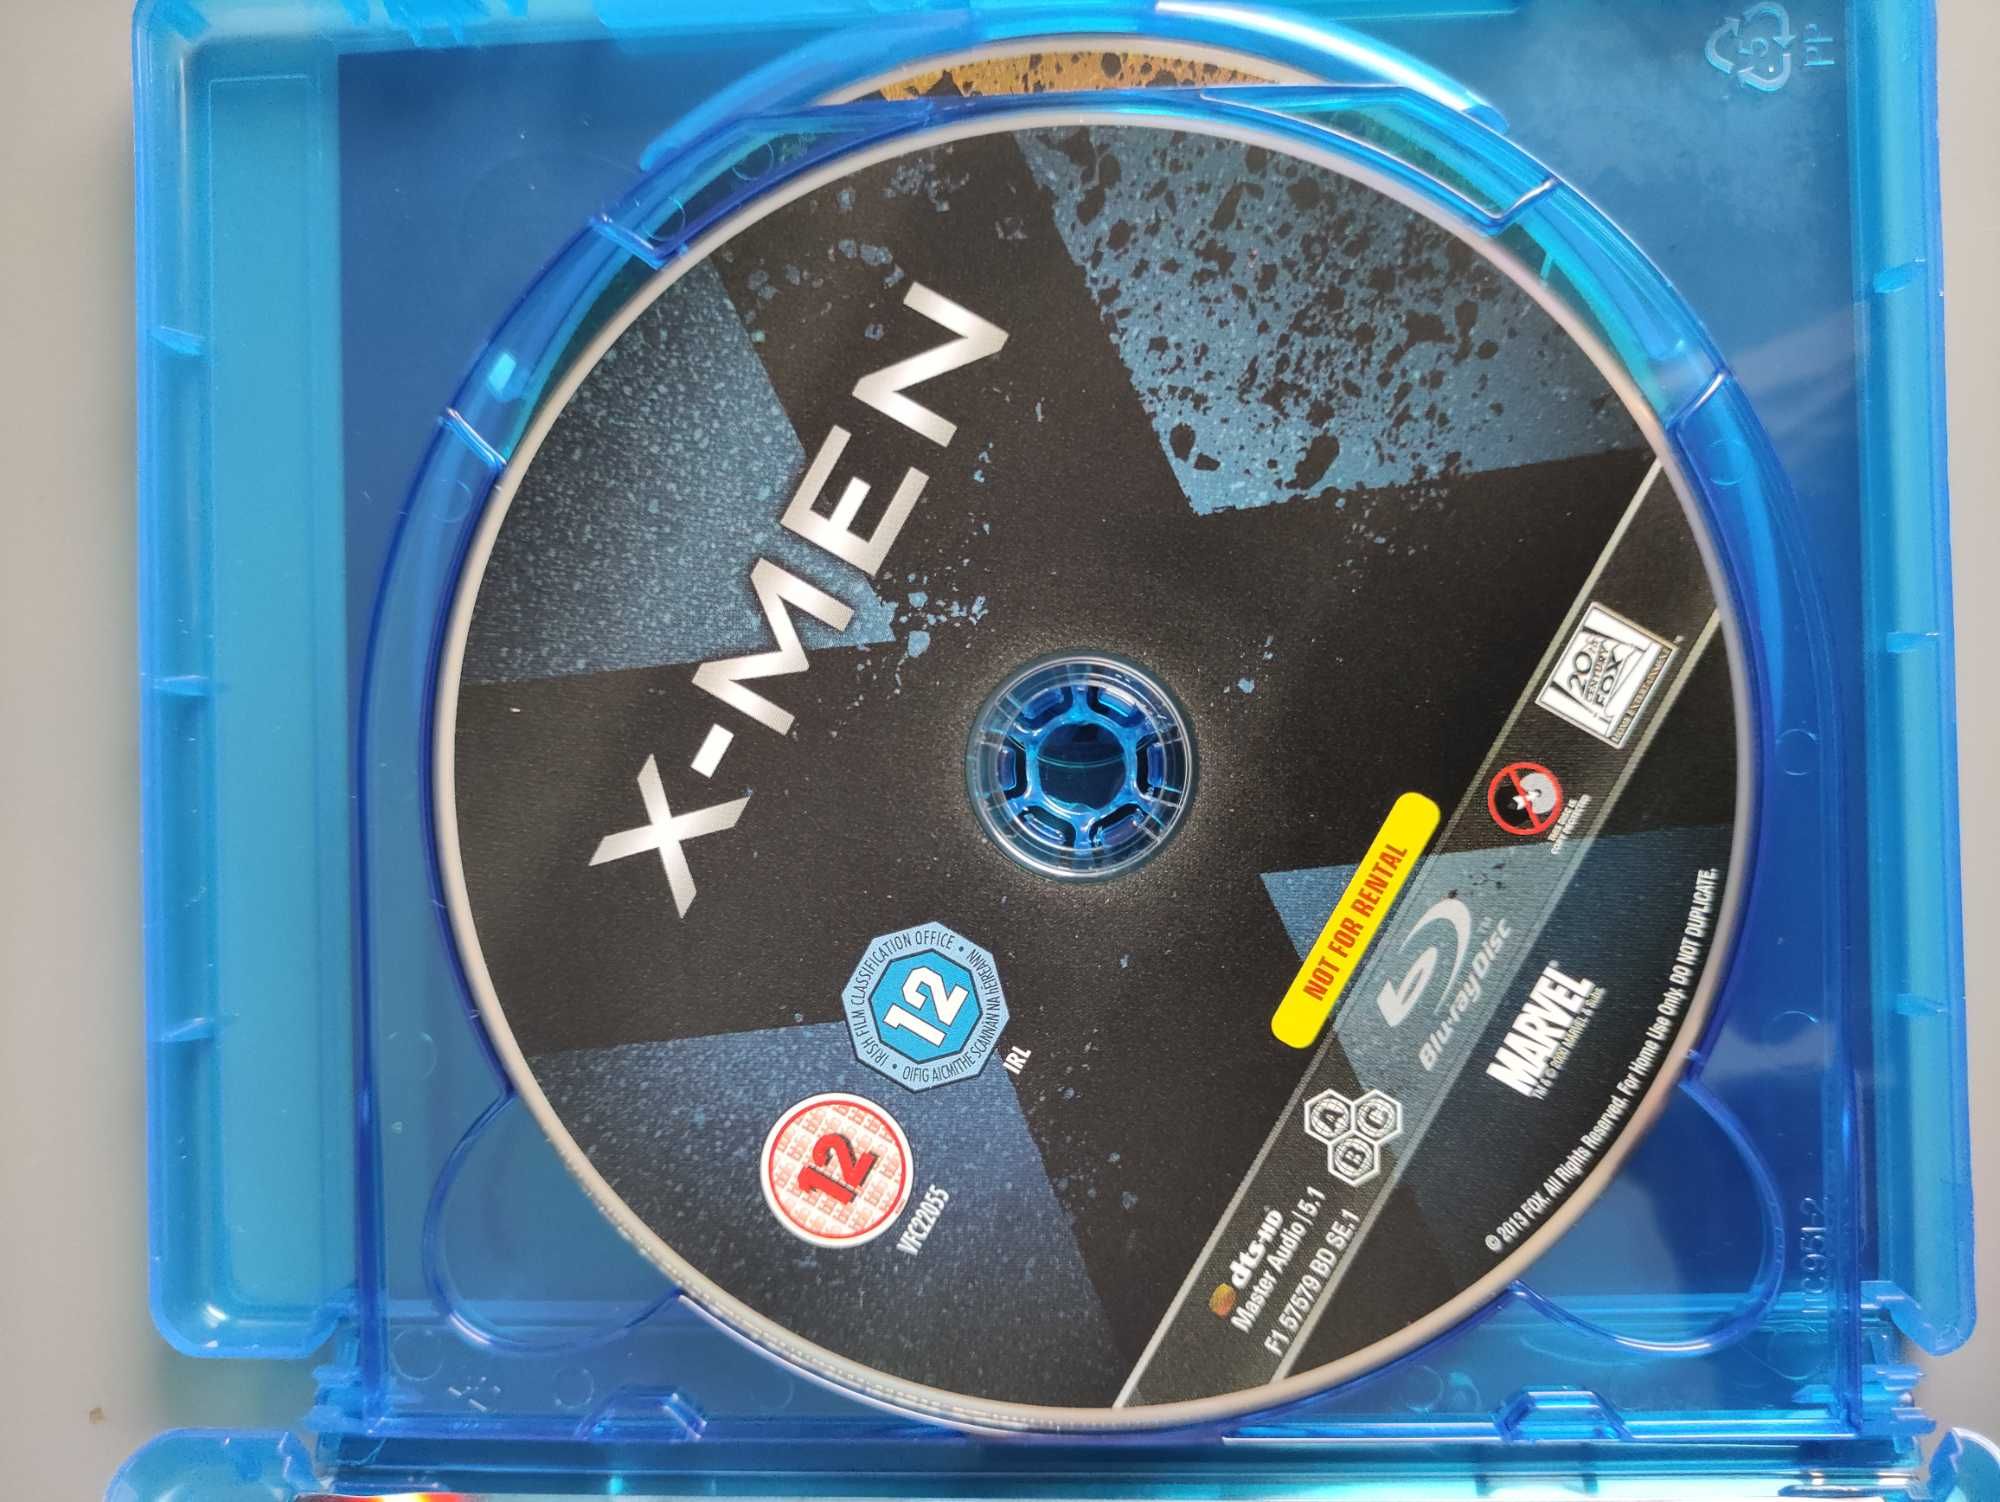 Filmy Blu-ray X-men Trilogy (X-men, X-men 2 oraz X-men The Last Stand)